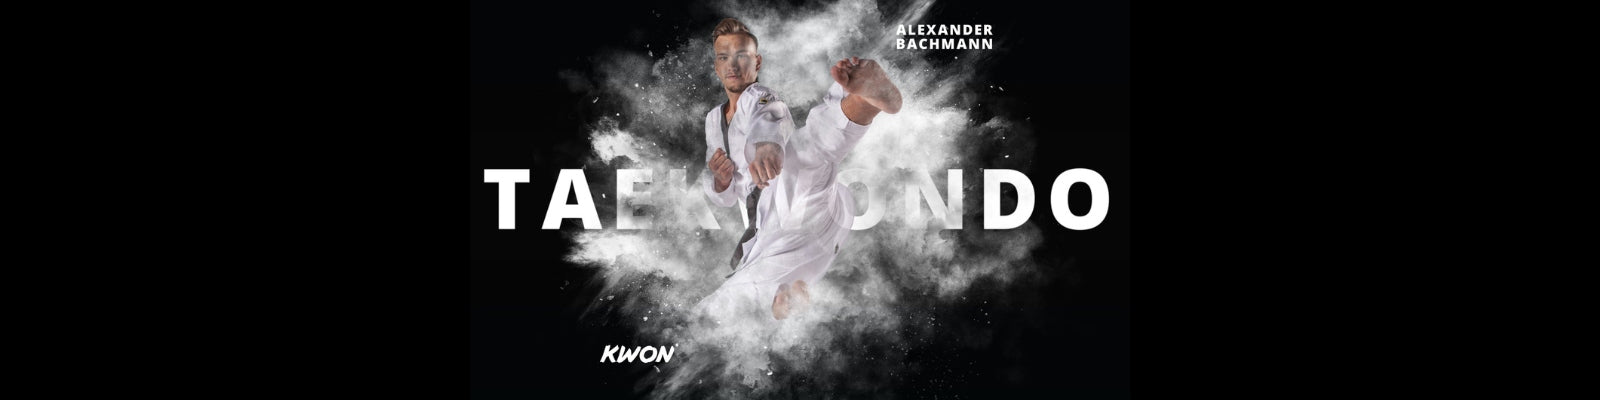 KWON Taekwondo website banner